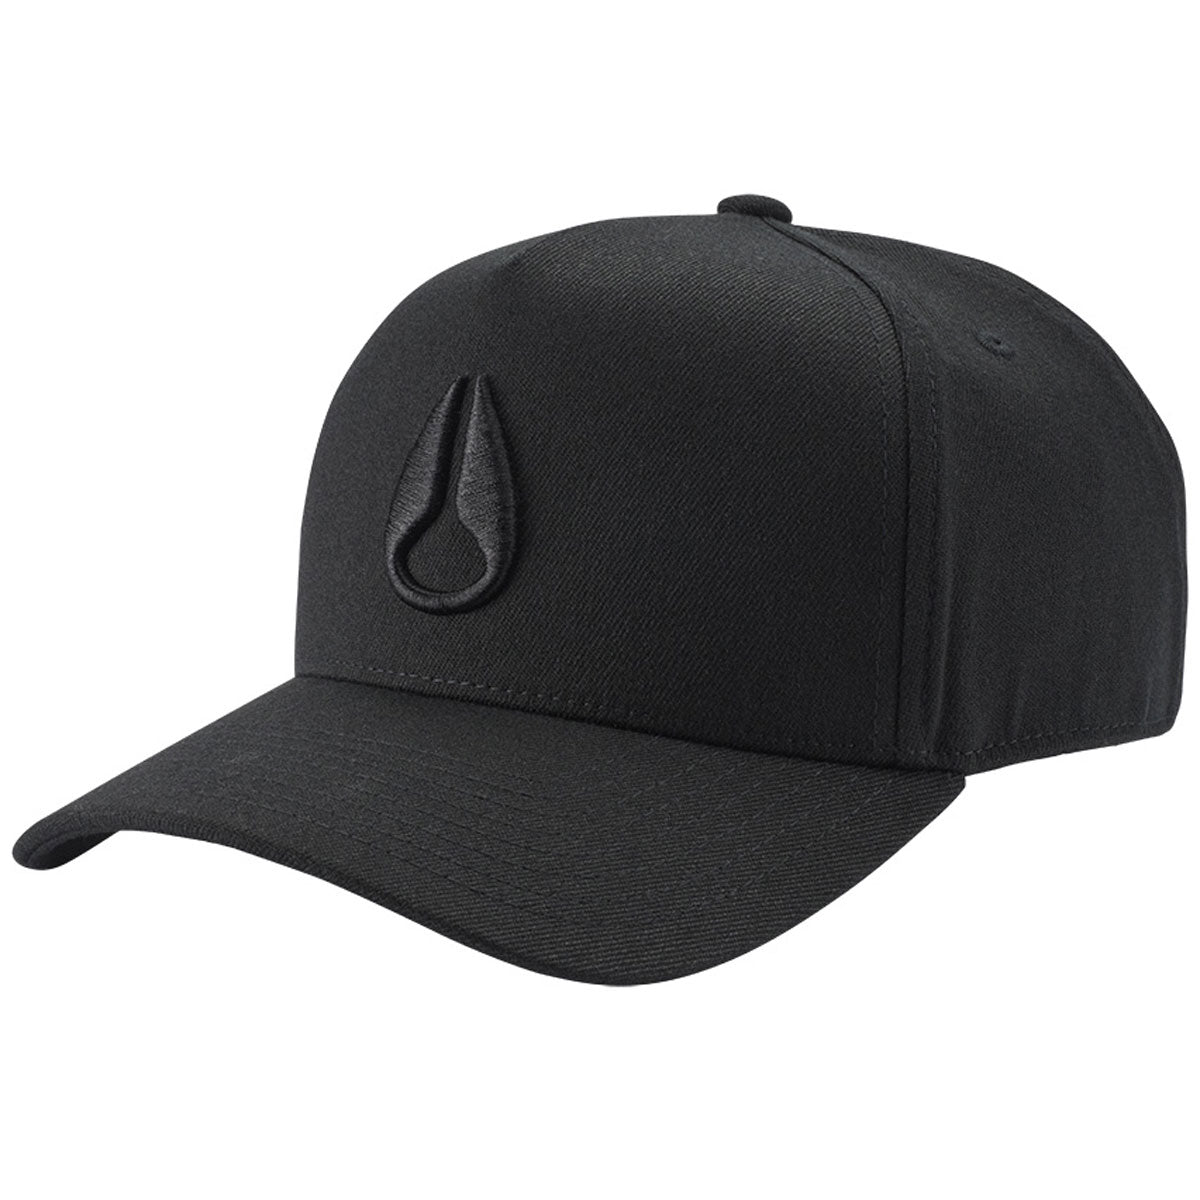 Nixon Deep Down Athletic Snapback Hat - All Black/Black image 1